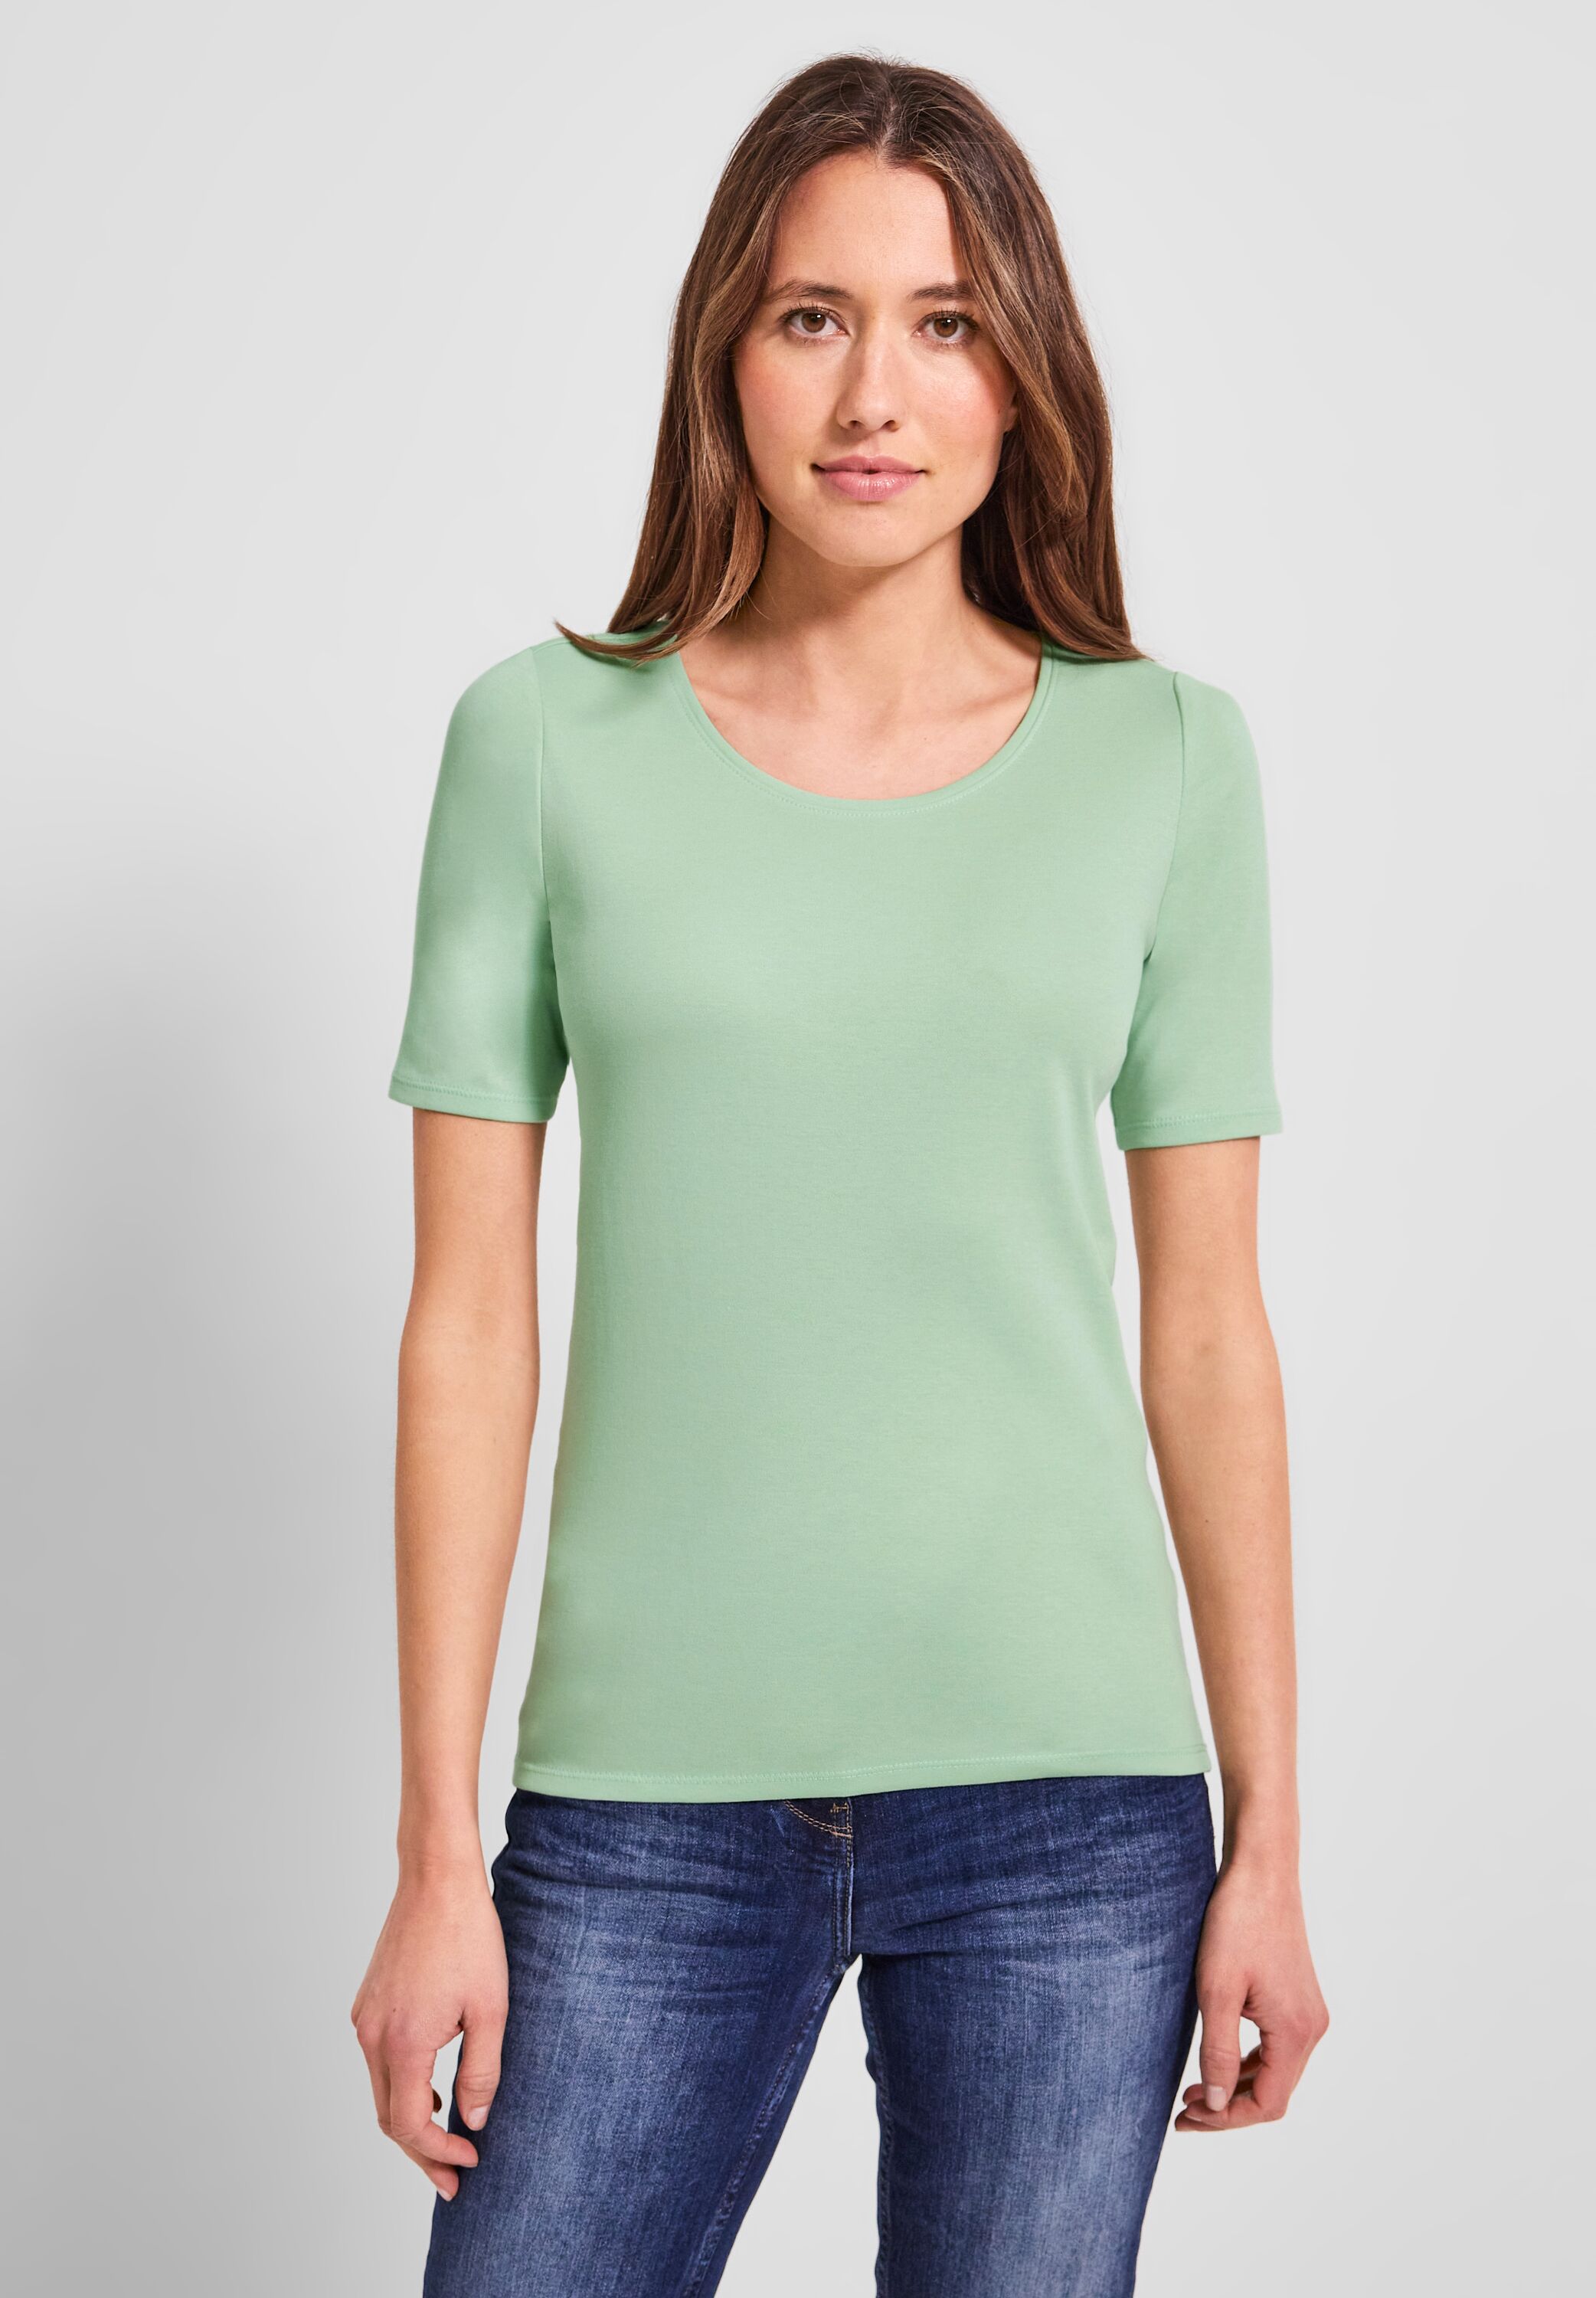 Salvia Fresh Lena Green CECIL - in B317515-14851 CONCEPT T-Shirt Mode